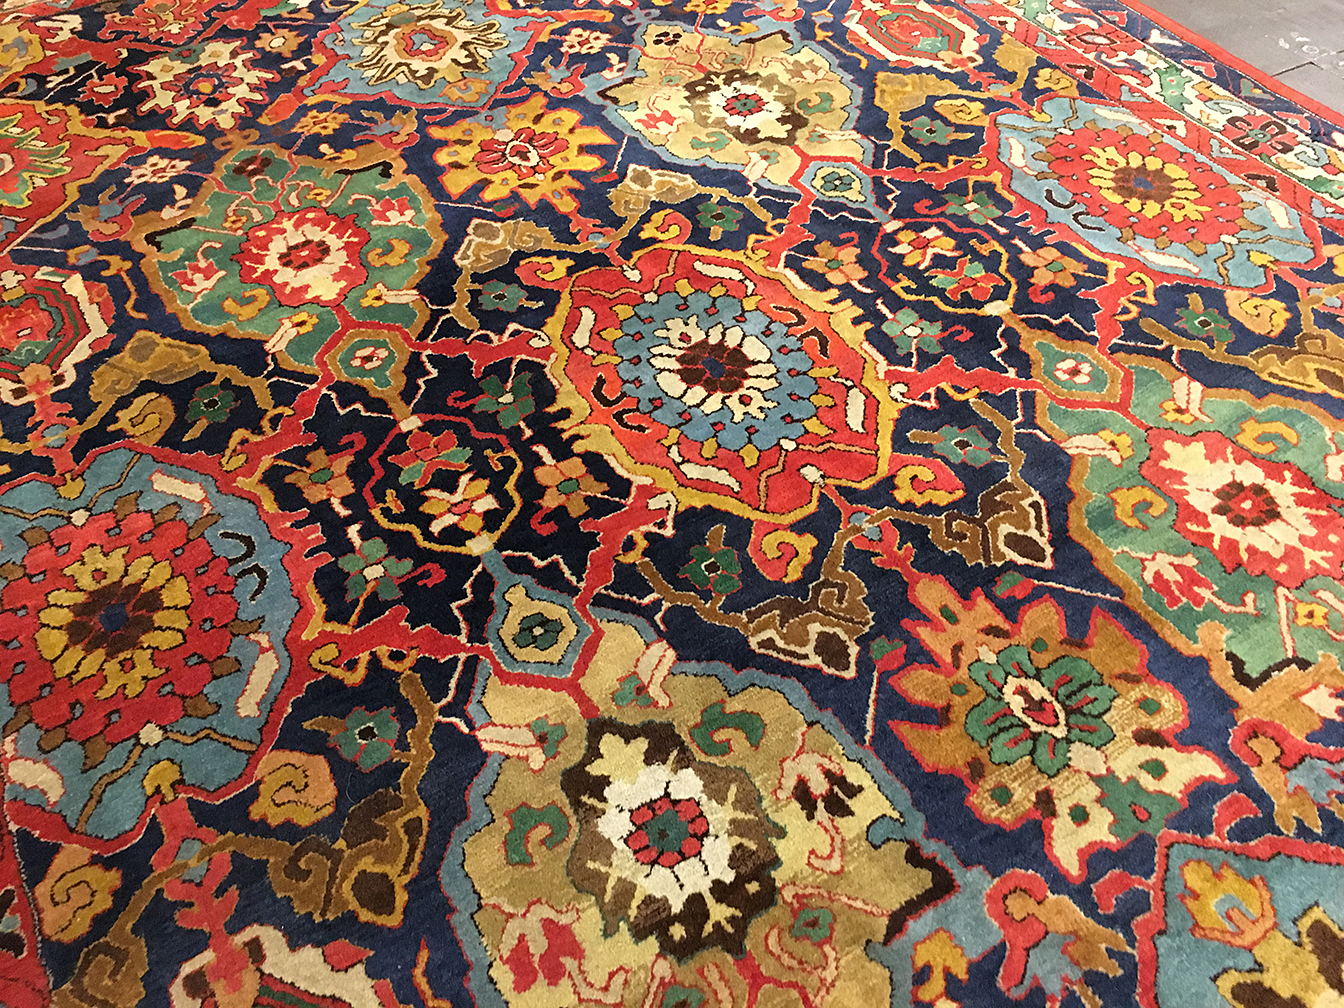 Antique hooked Carpet - # 80109